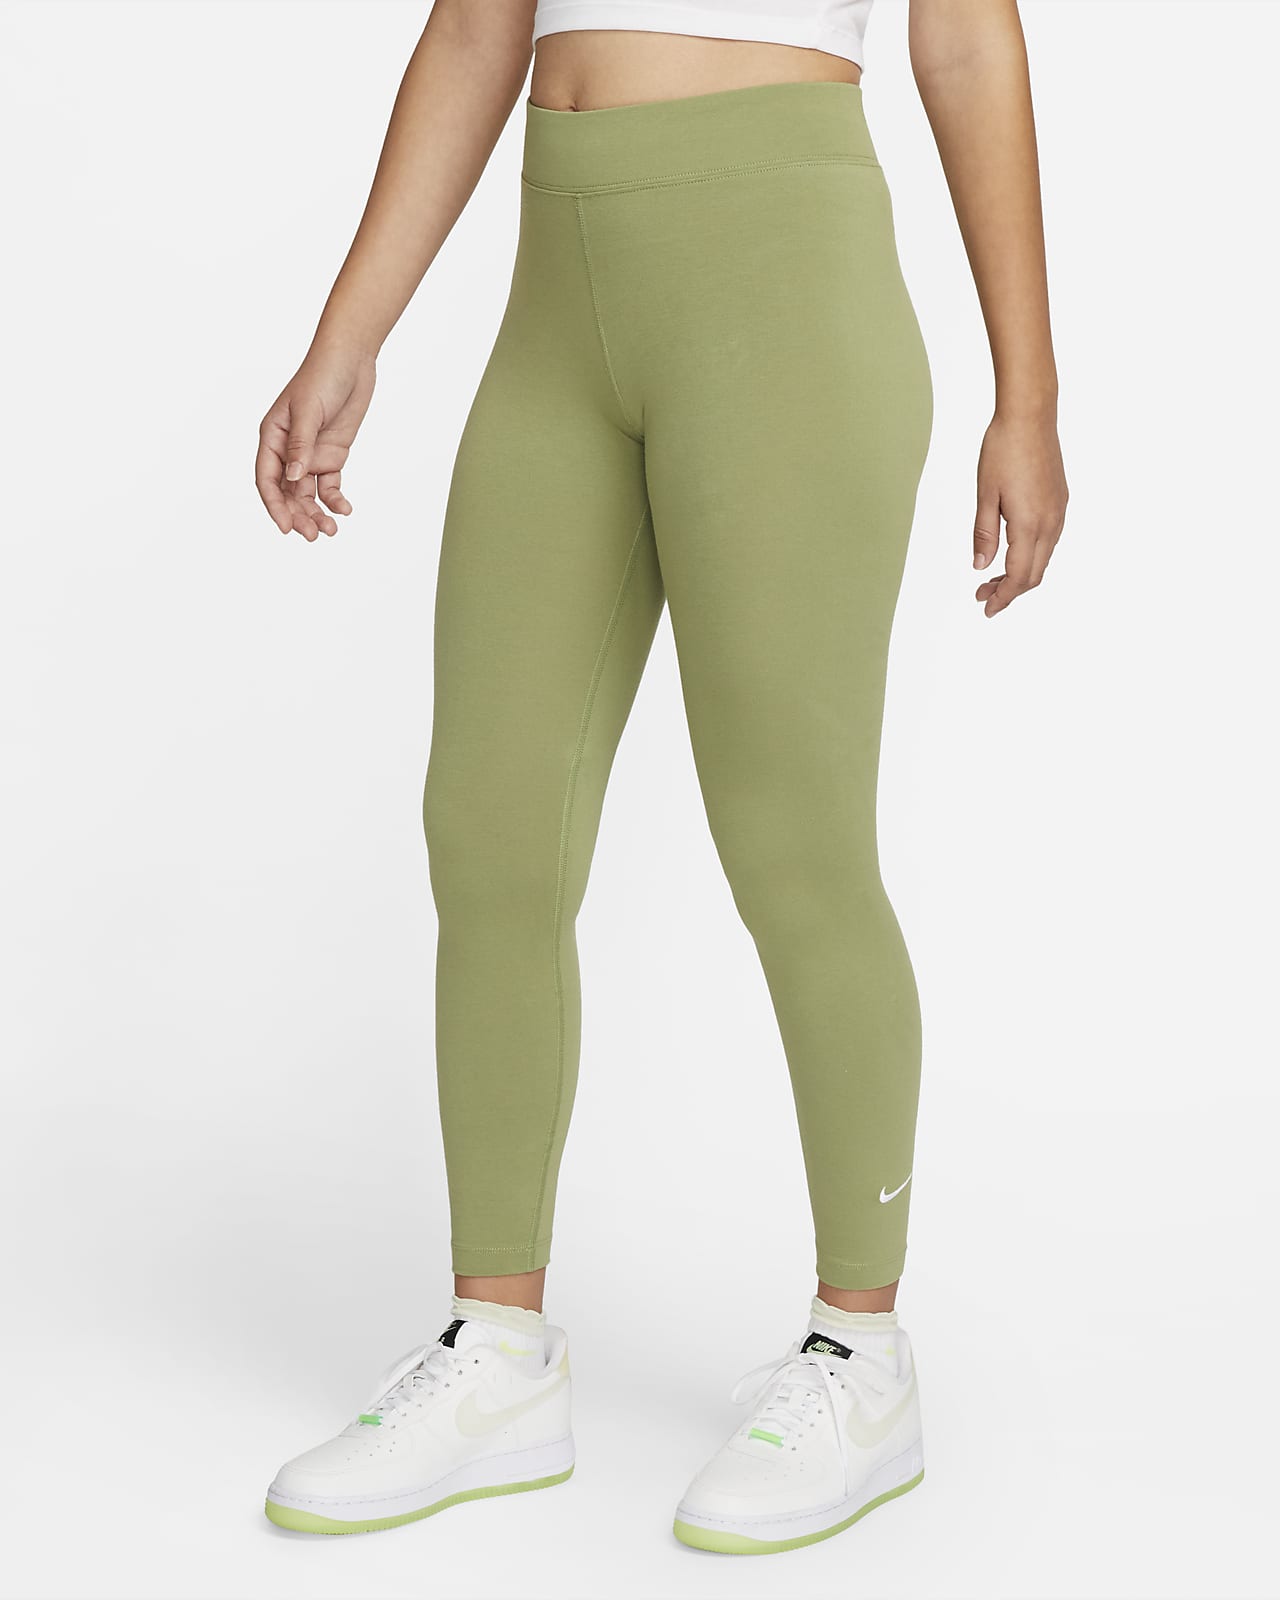 tierra esposa Dinámica Nike Sportswear Essential Leggings de talle medio de 7/8 - Mujer. Nike ES